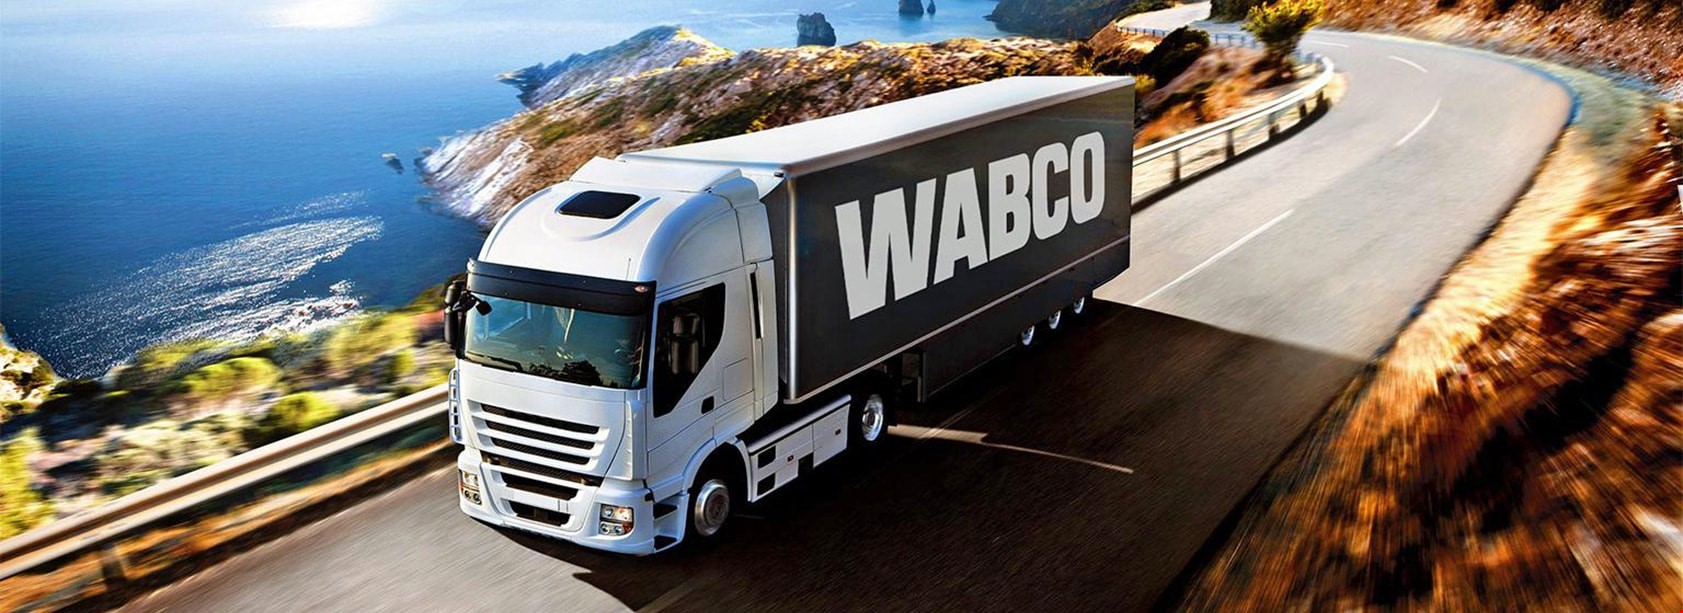 wabco portfolio truck banner header.jpg